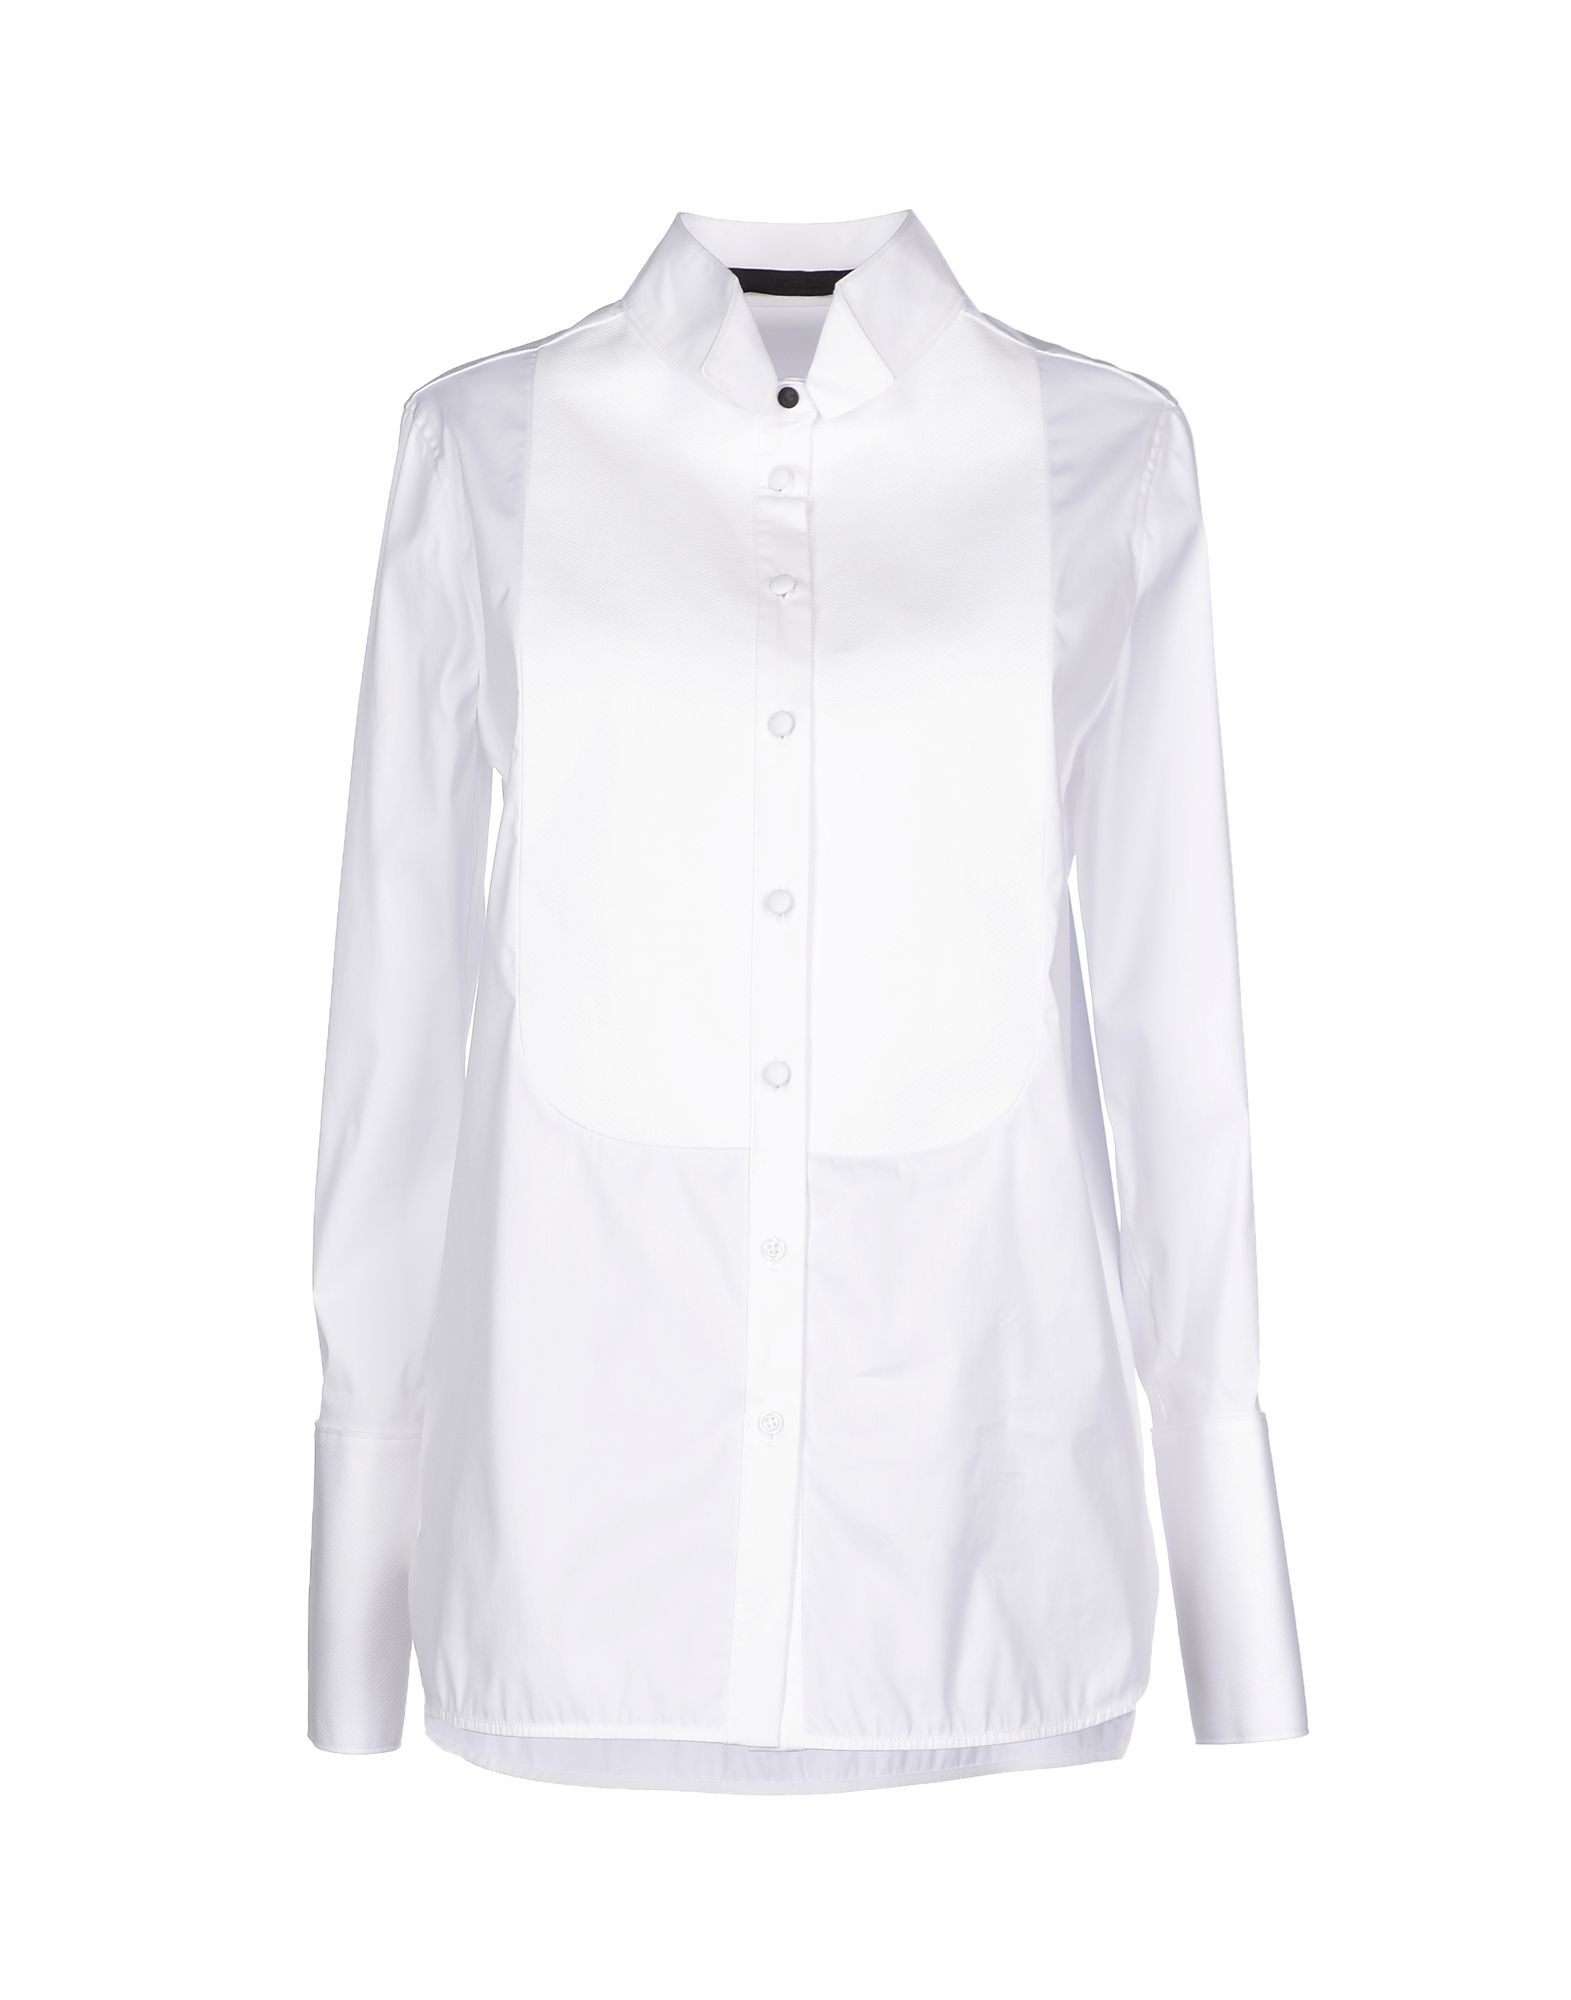 Lyst - Karl Lagerfeld Shirt in White